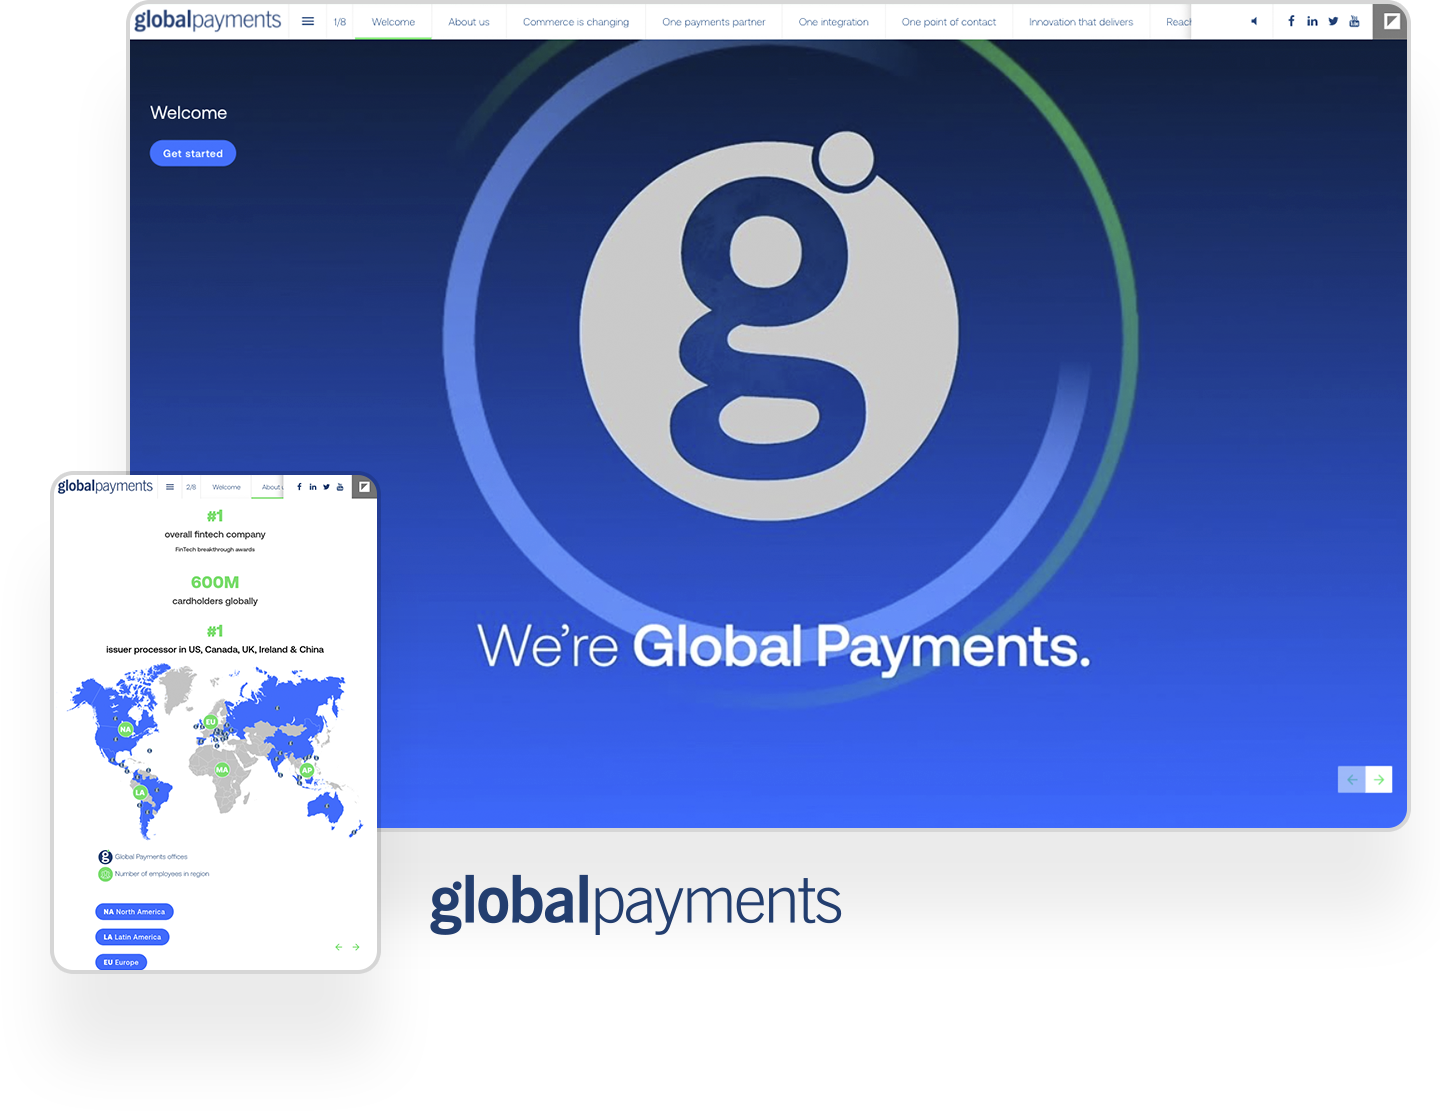 global-payments-interactive-brochure